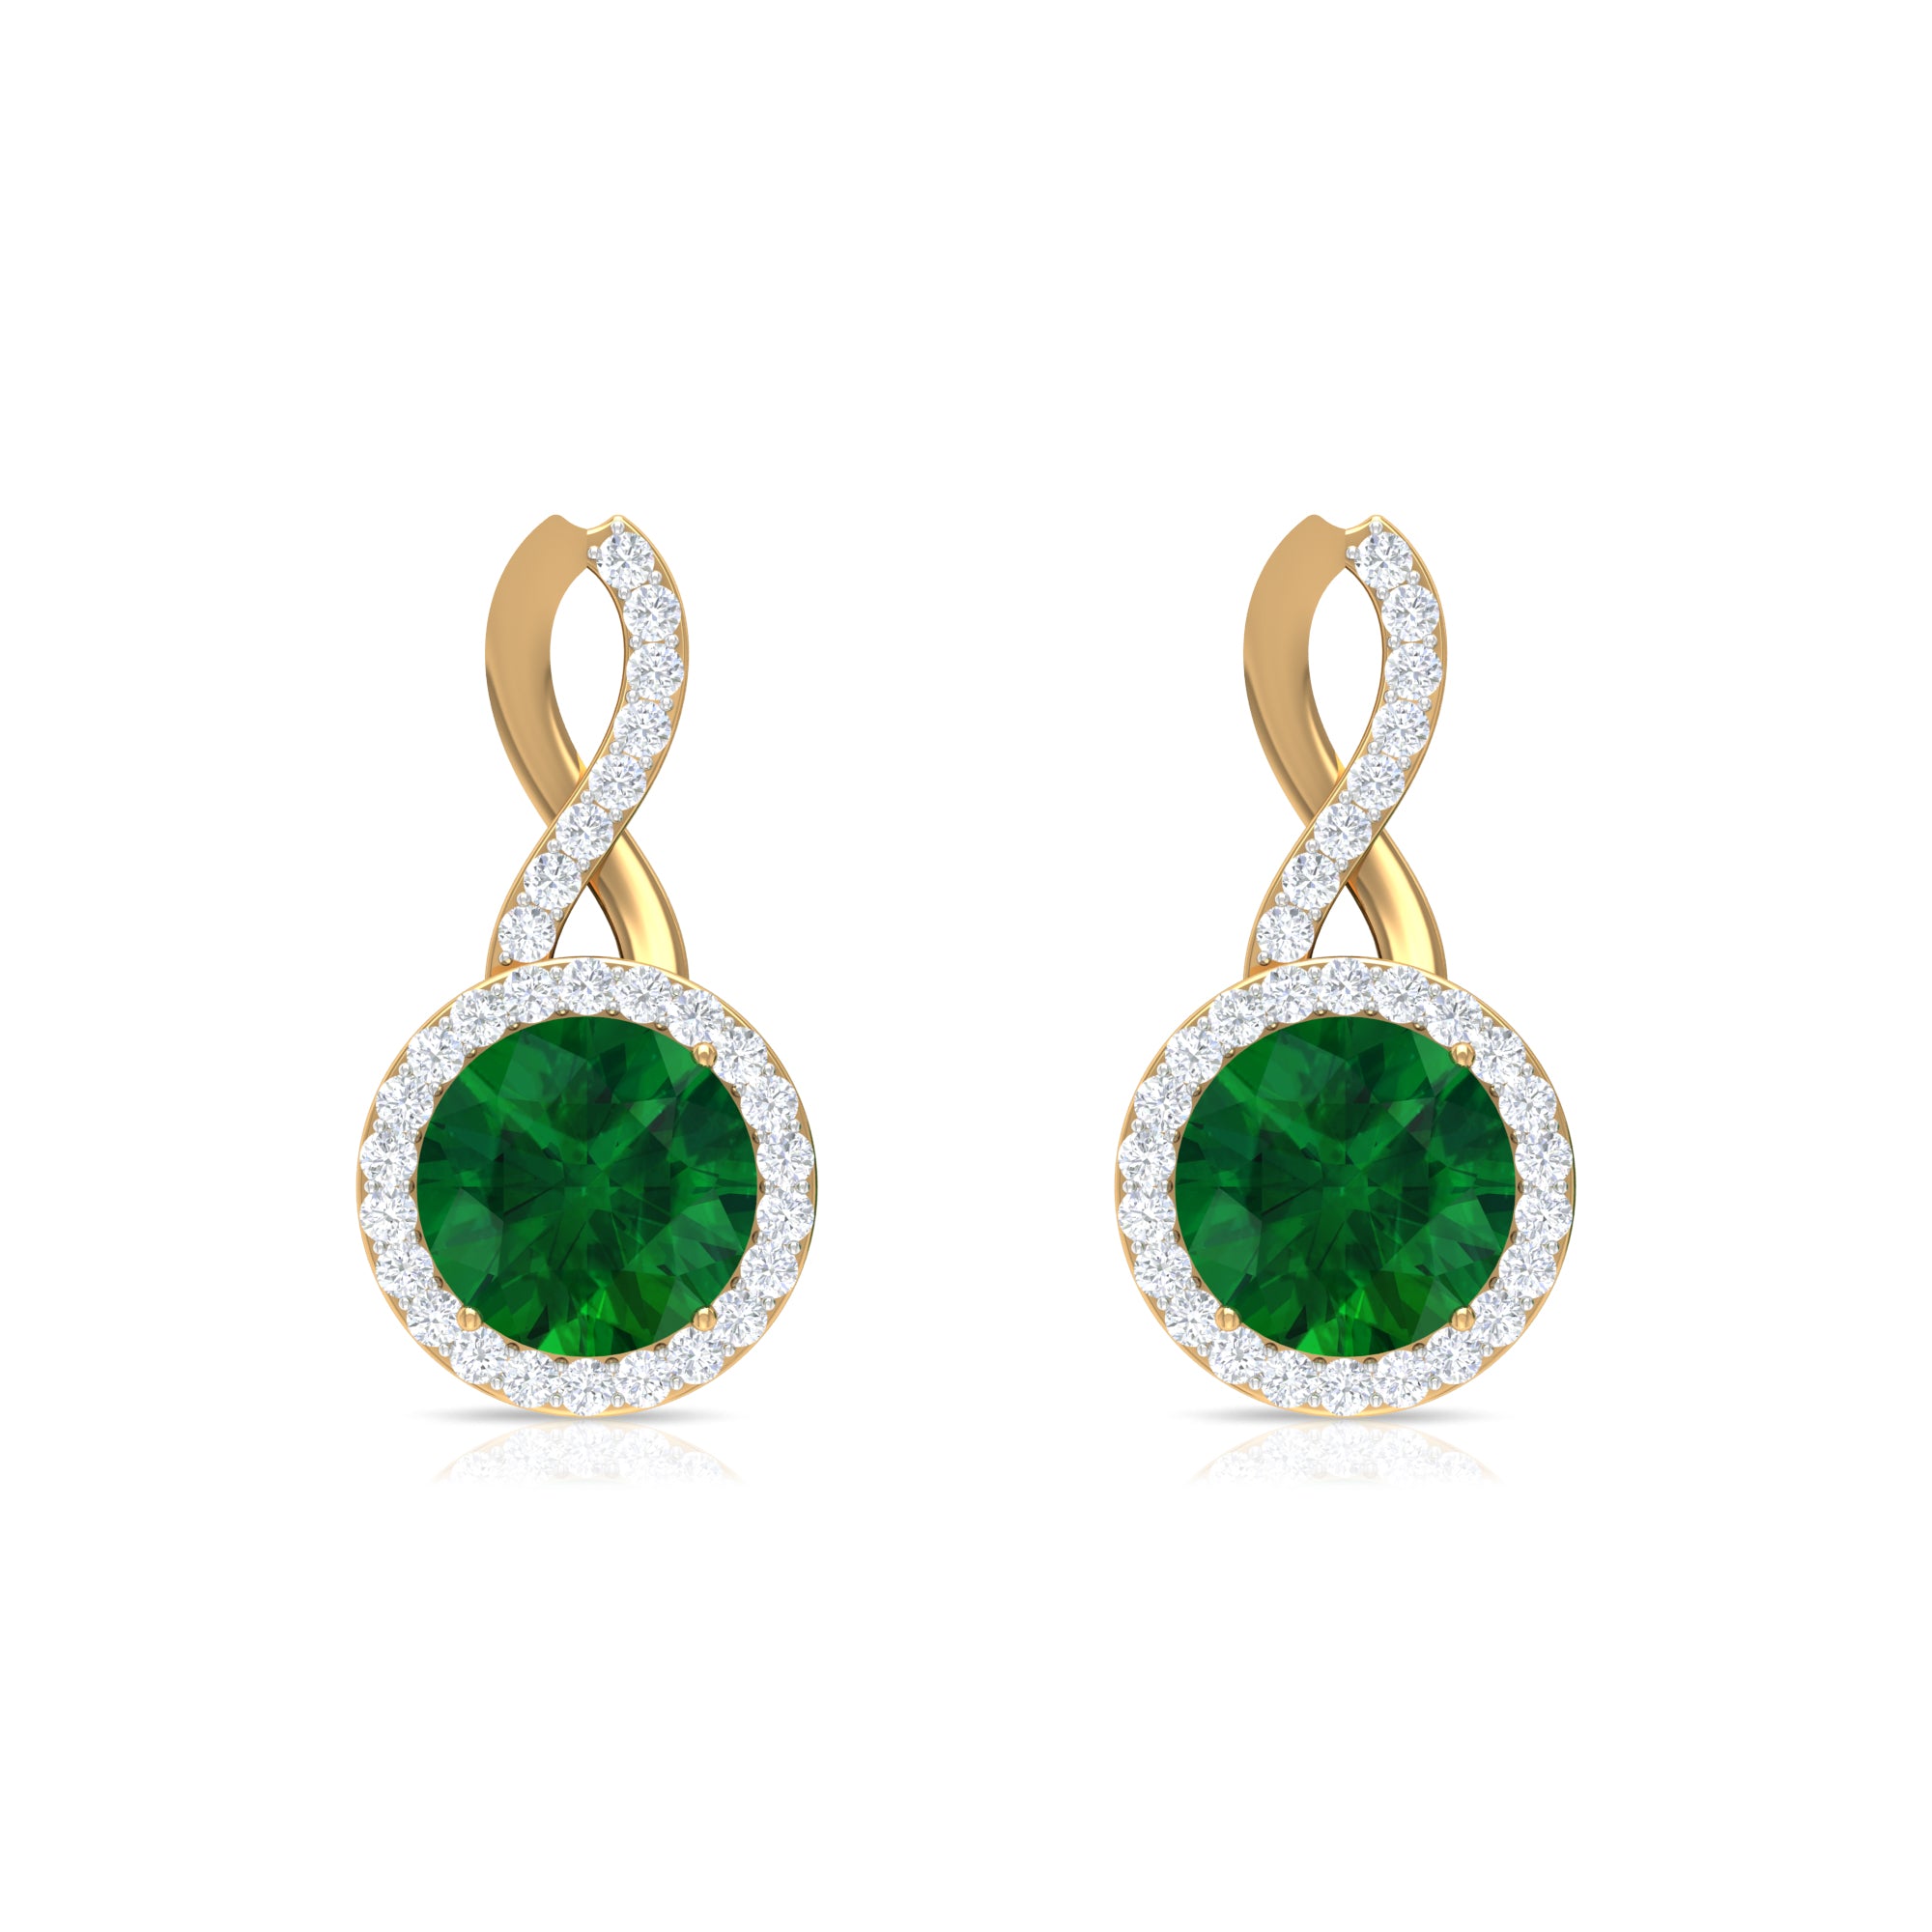 Round Emerald and Diamond Infinity Stud Earrings Emerald - ( AAA ) - Quality - Rosec Jewels